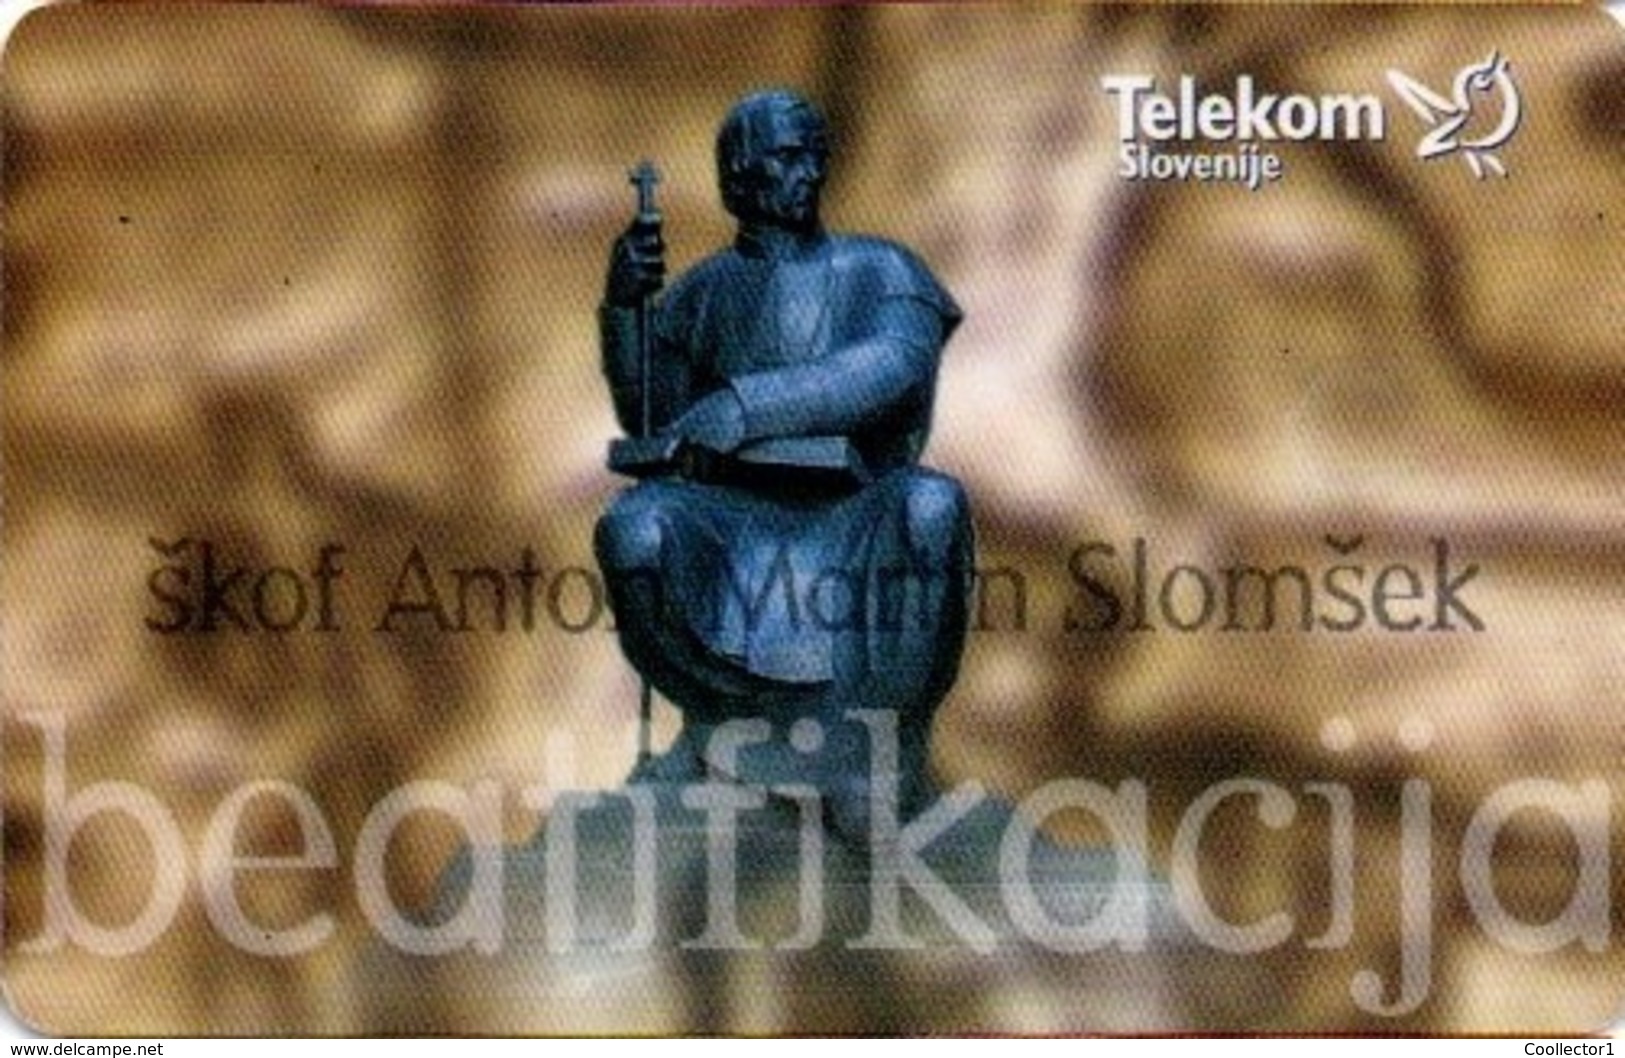 Slovenia, Slovenija, Slowenien, Telekom Slovenije - TS249. Very Rare Phonecard - Pope. Only 1.999 Pieces Issued. - Slovenia